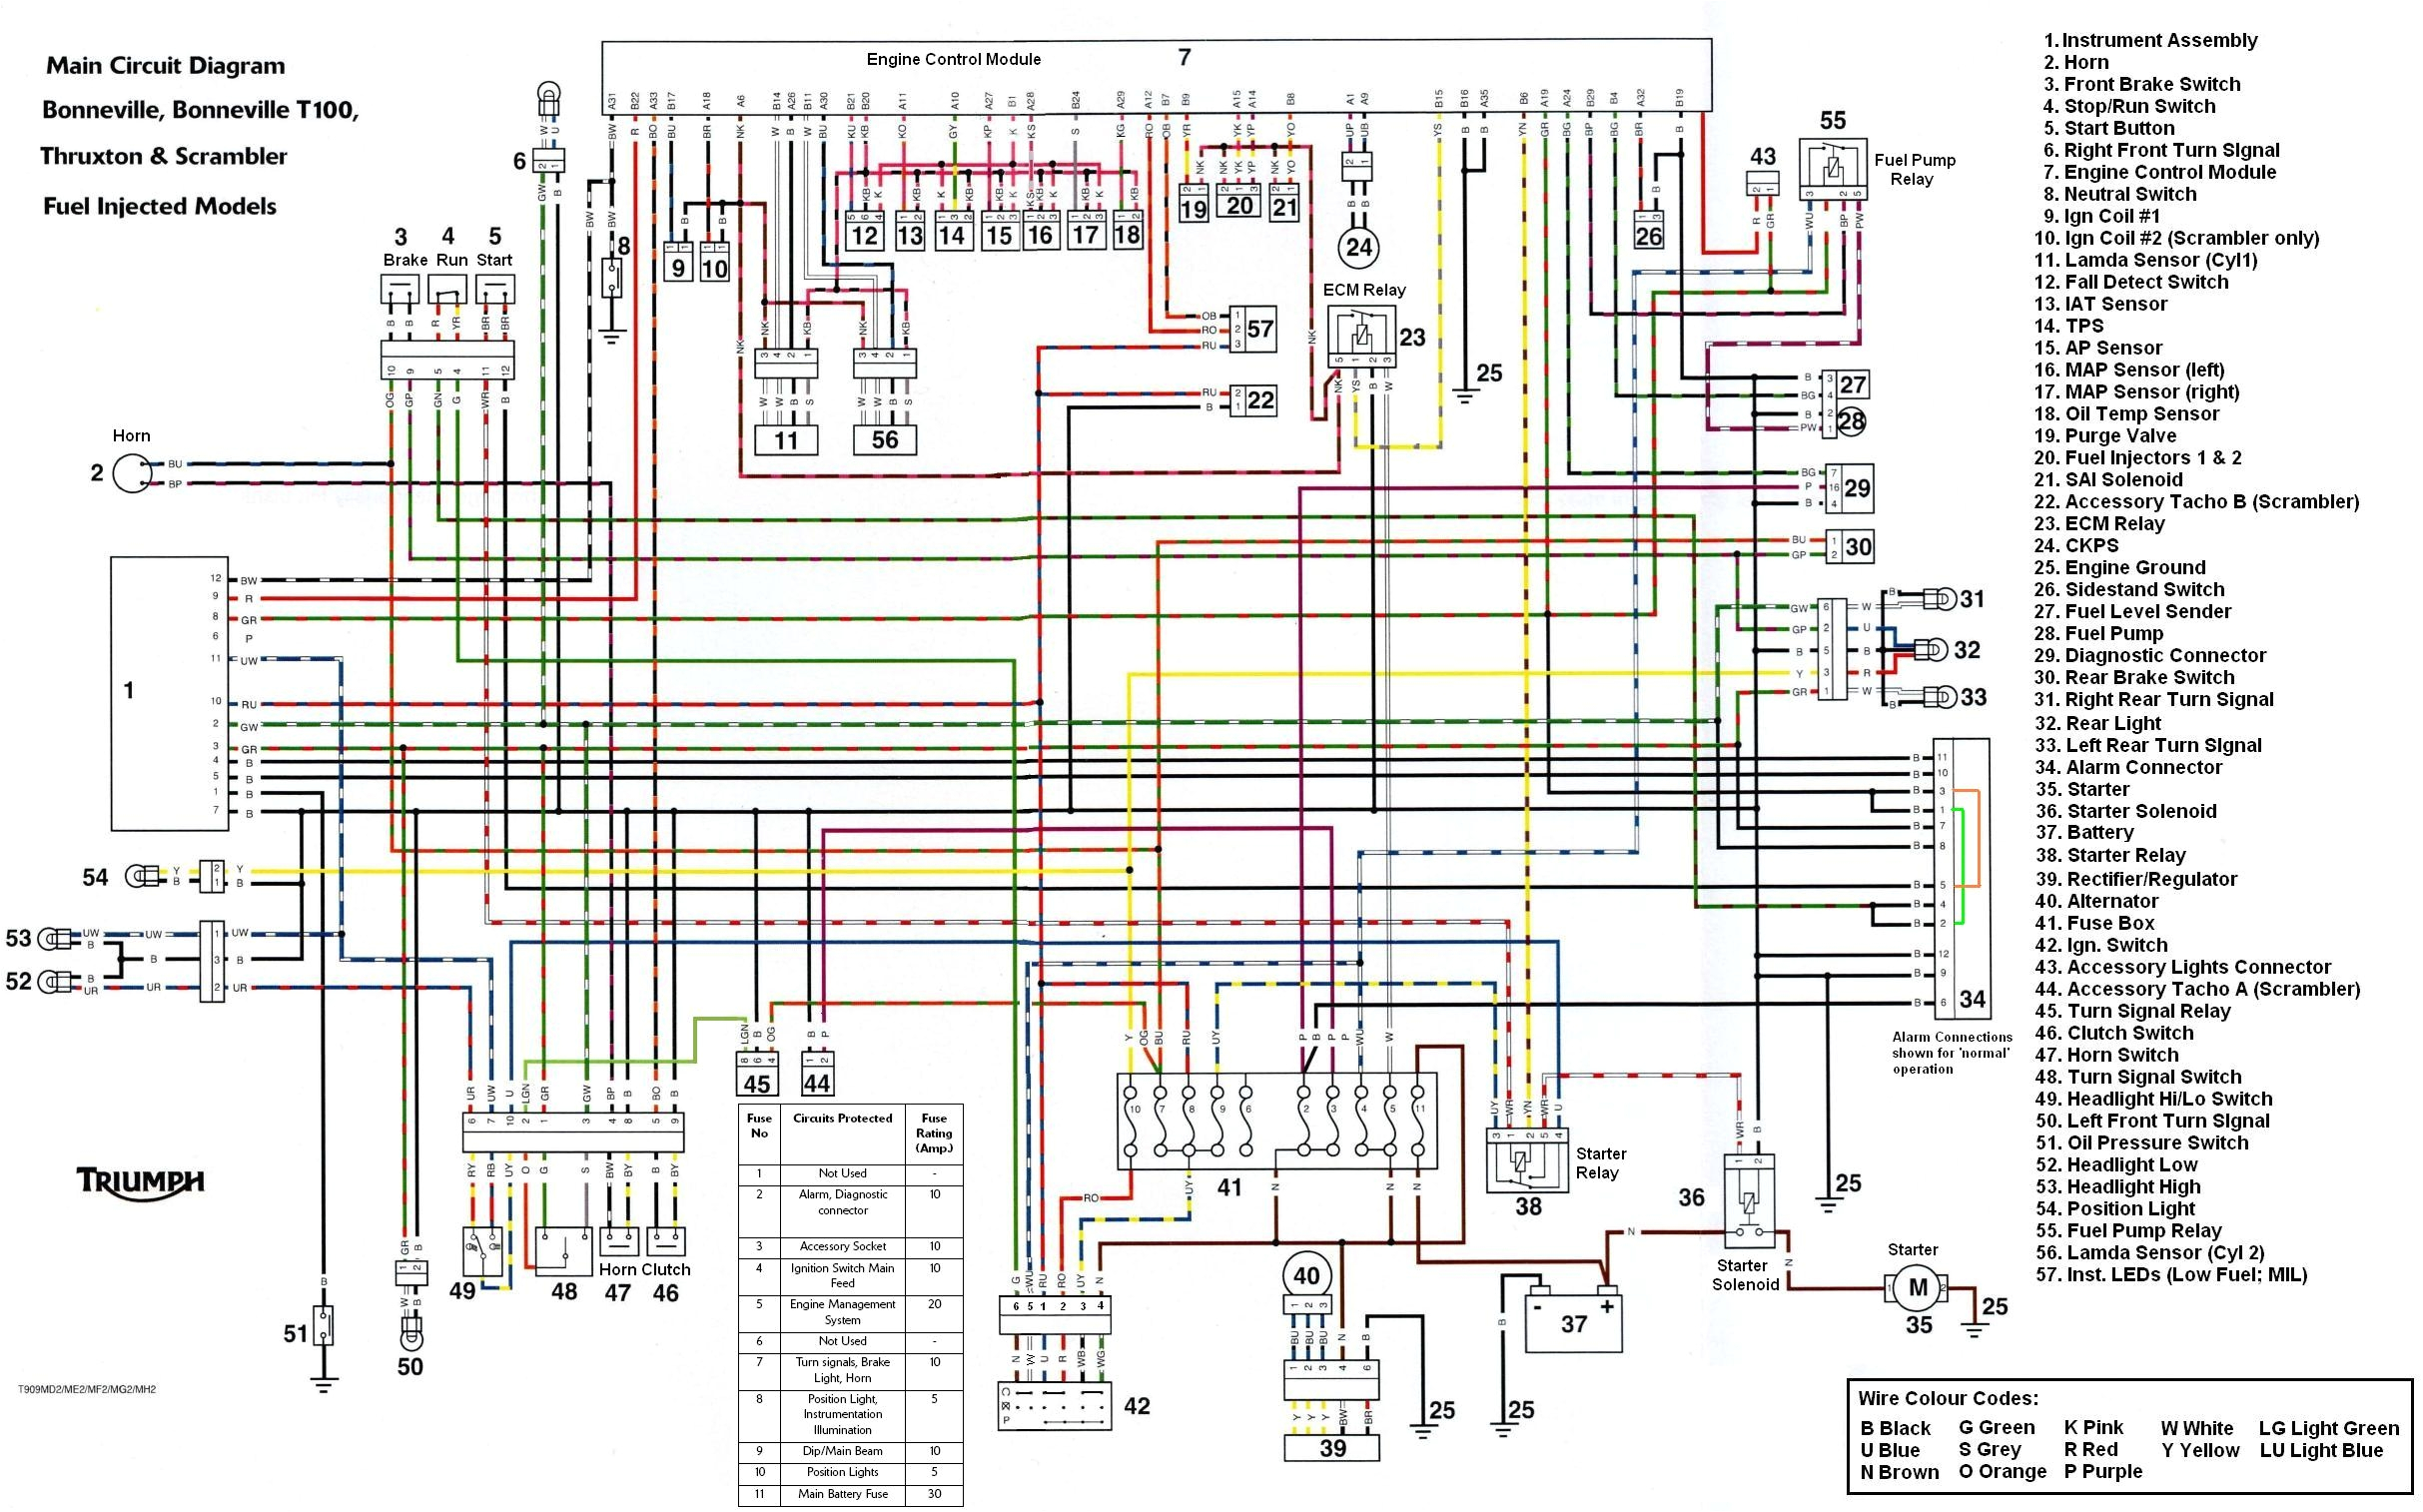 wiring diagram triumph bonneville wiring diagram files triumph bonneville t100 thruxton scrambler wiring diagram evan wiring